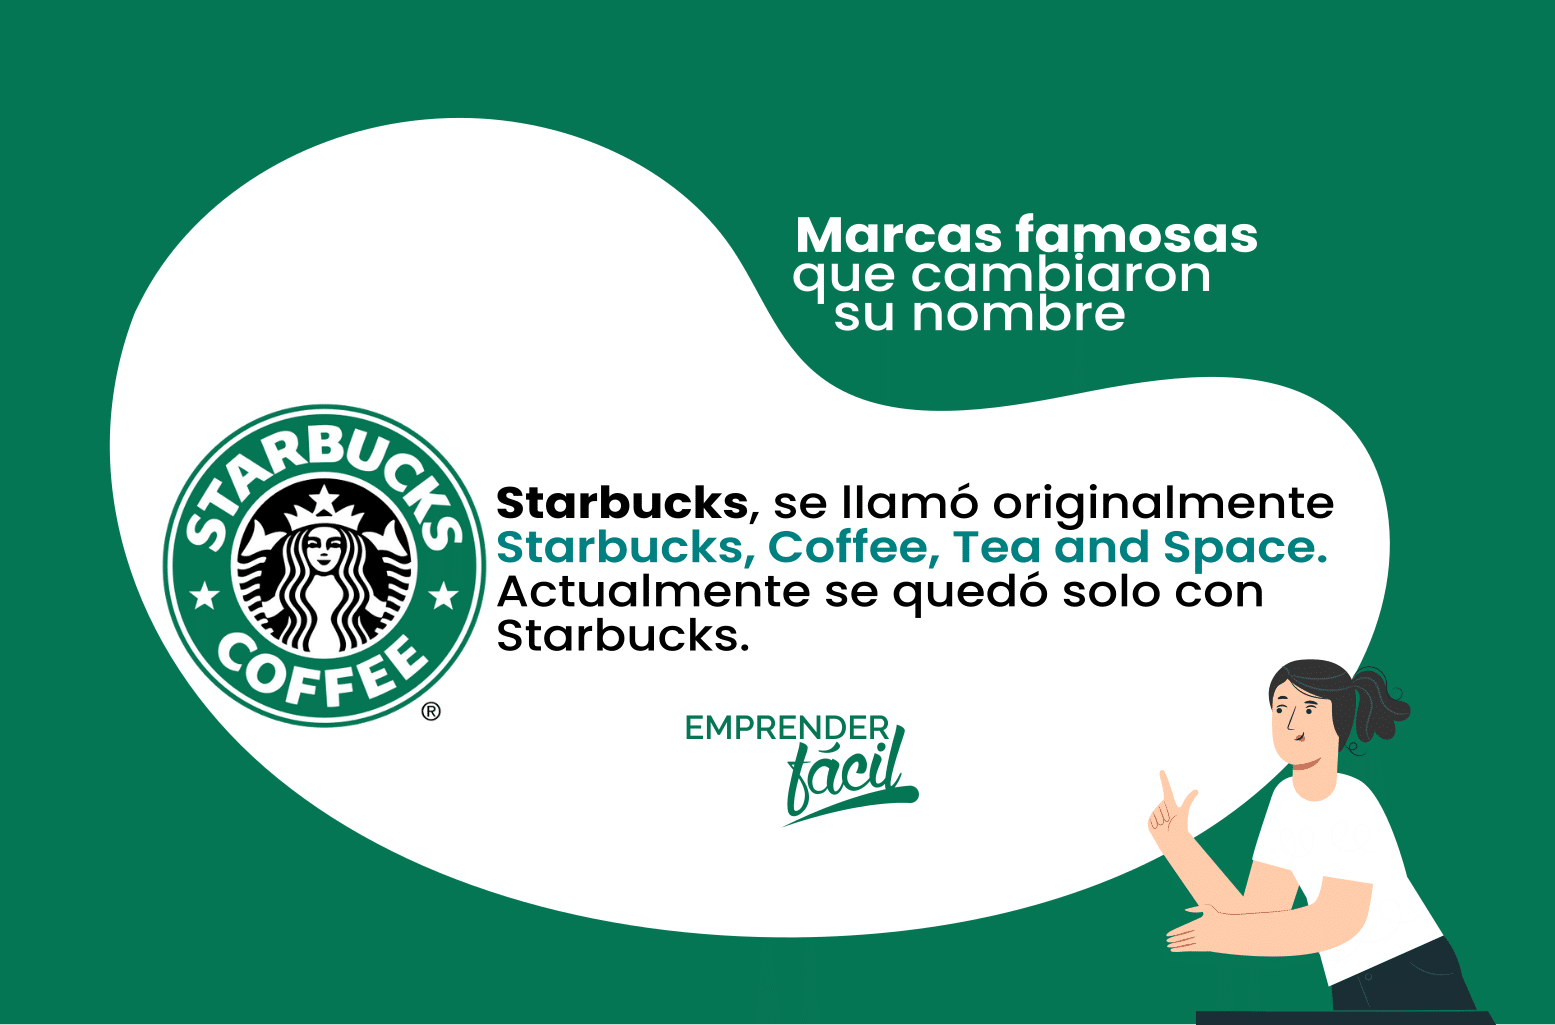 Antes de ser Starbucks, la empresa se llamó Starbucks, Coffee, Tea and Space